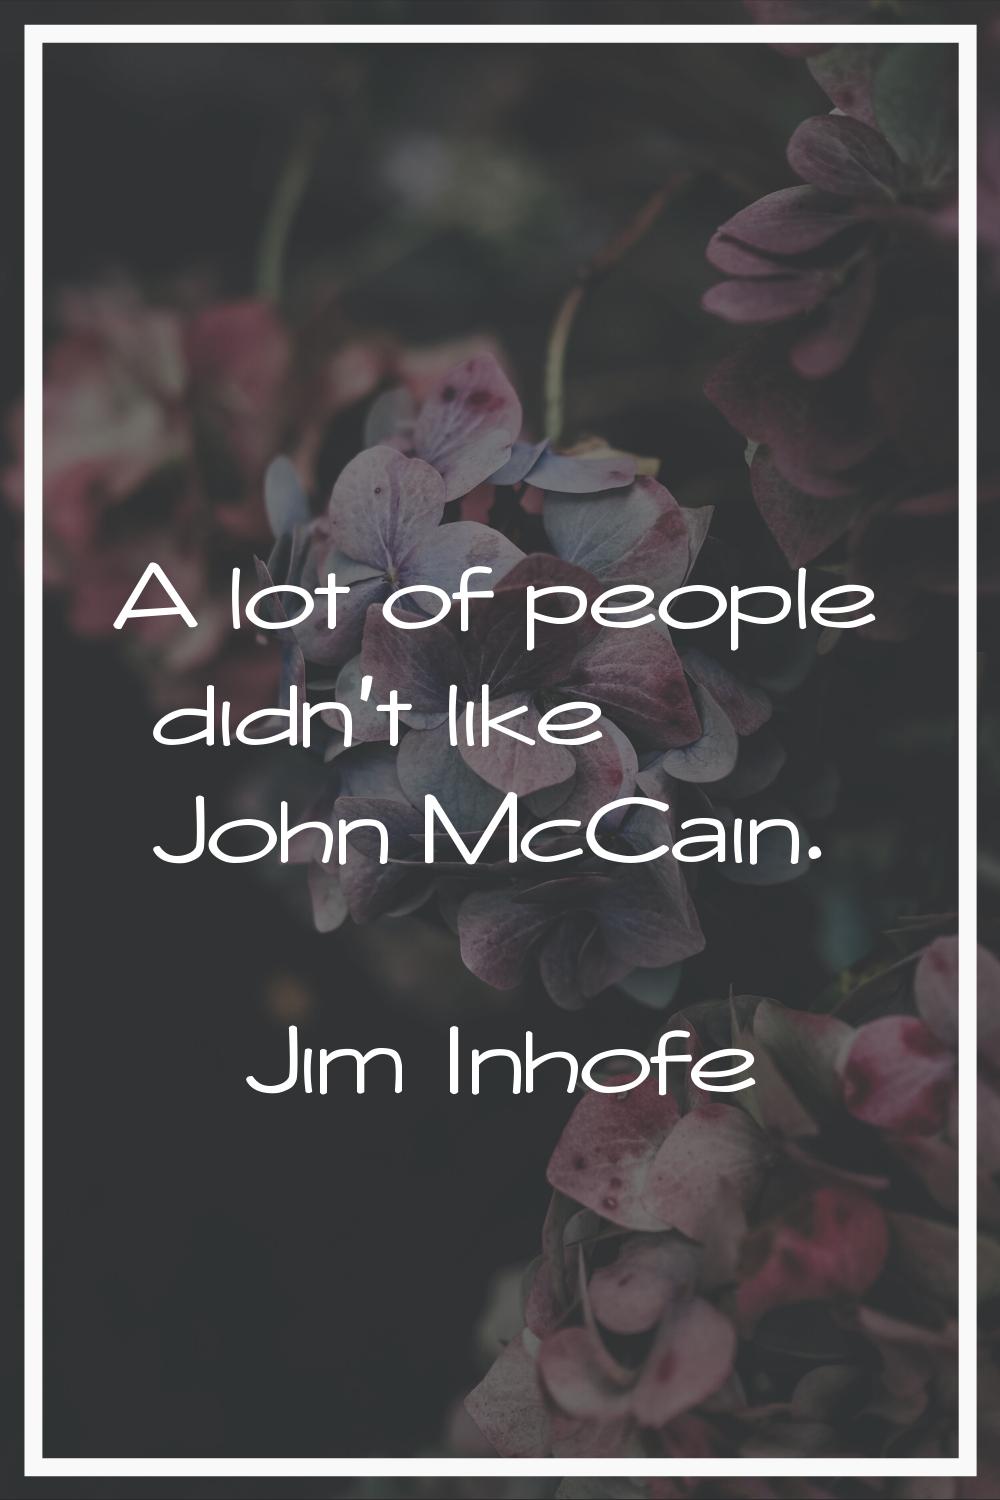 A lot of people didn't like John McCain.